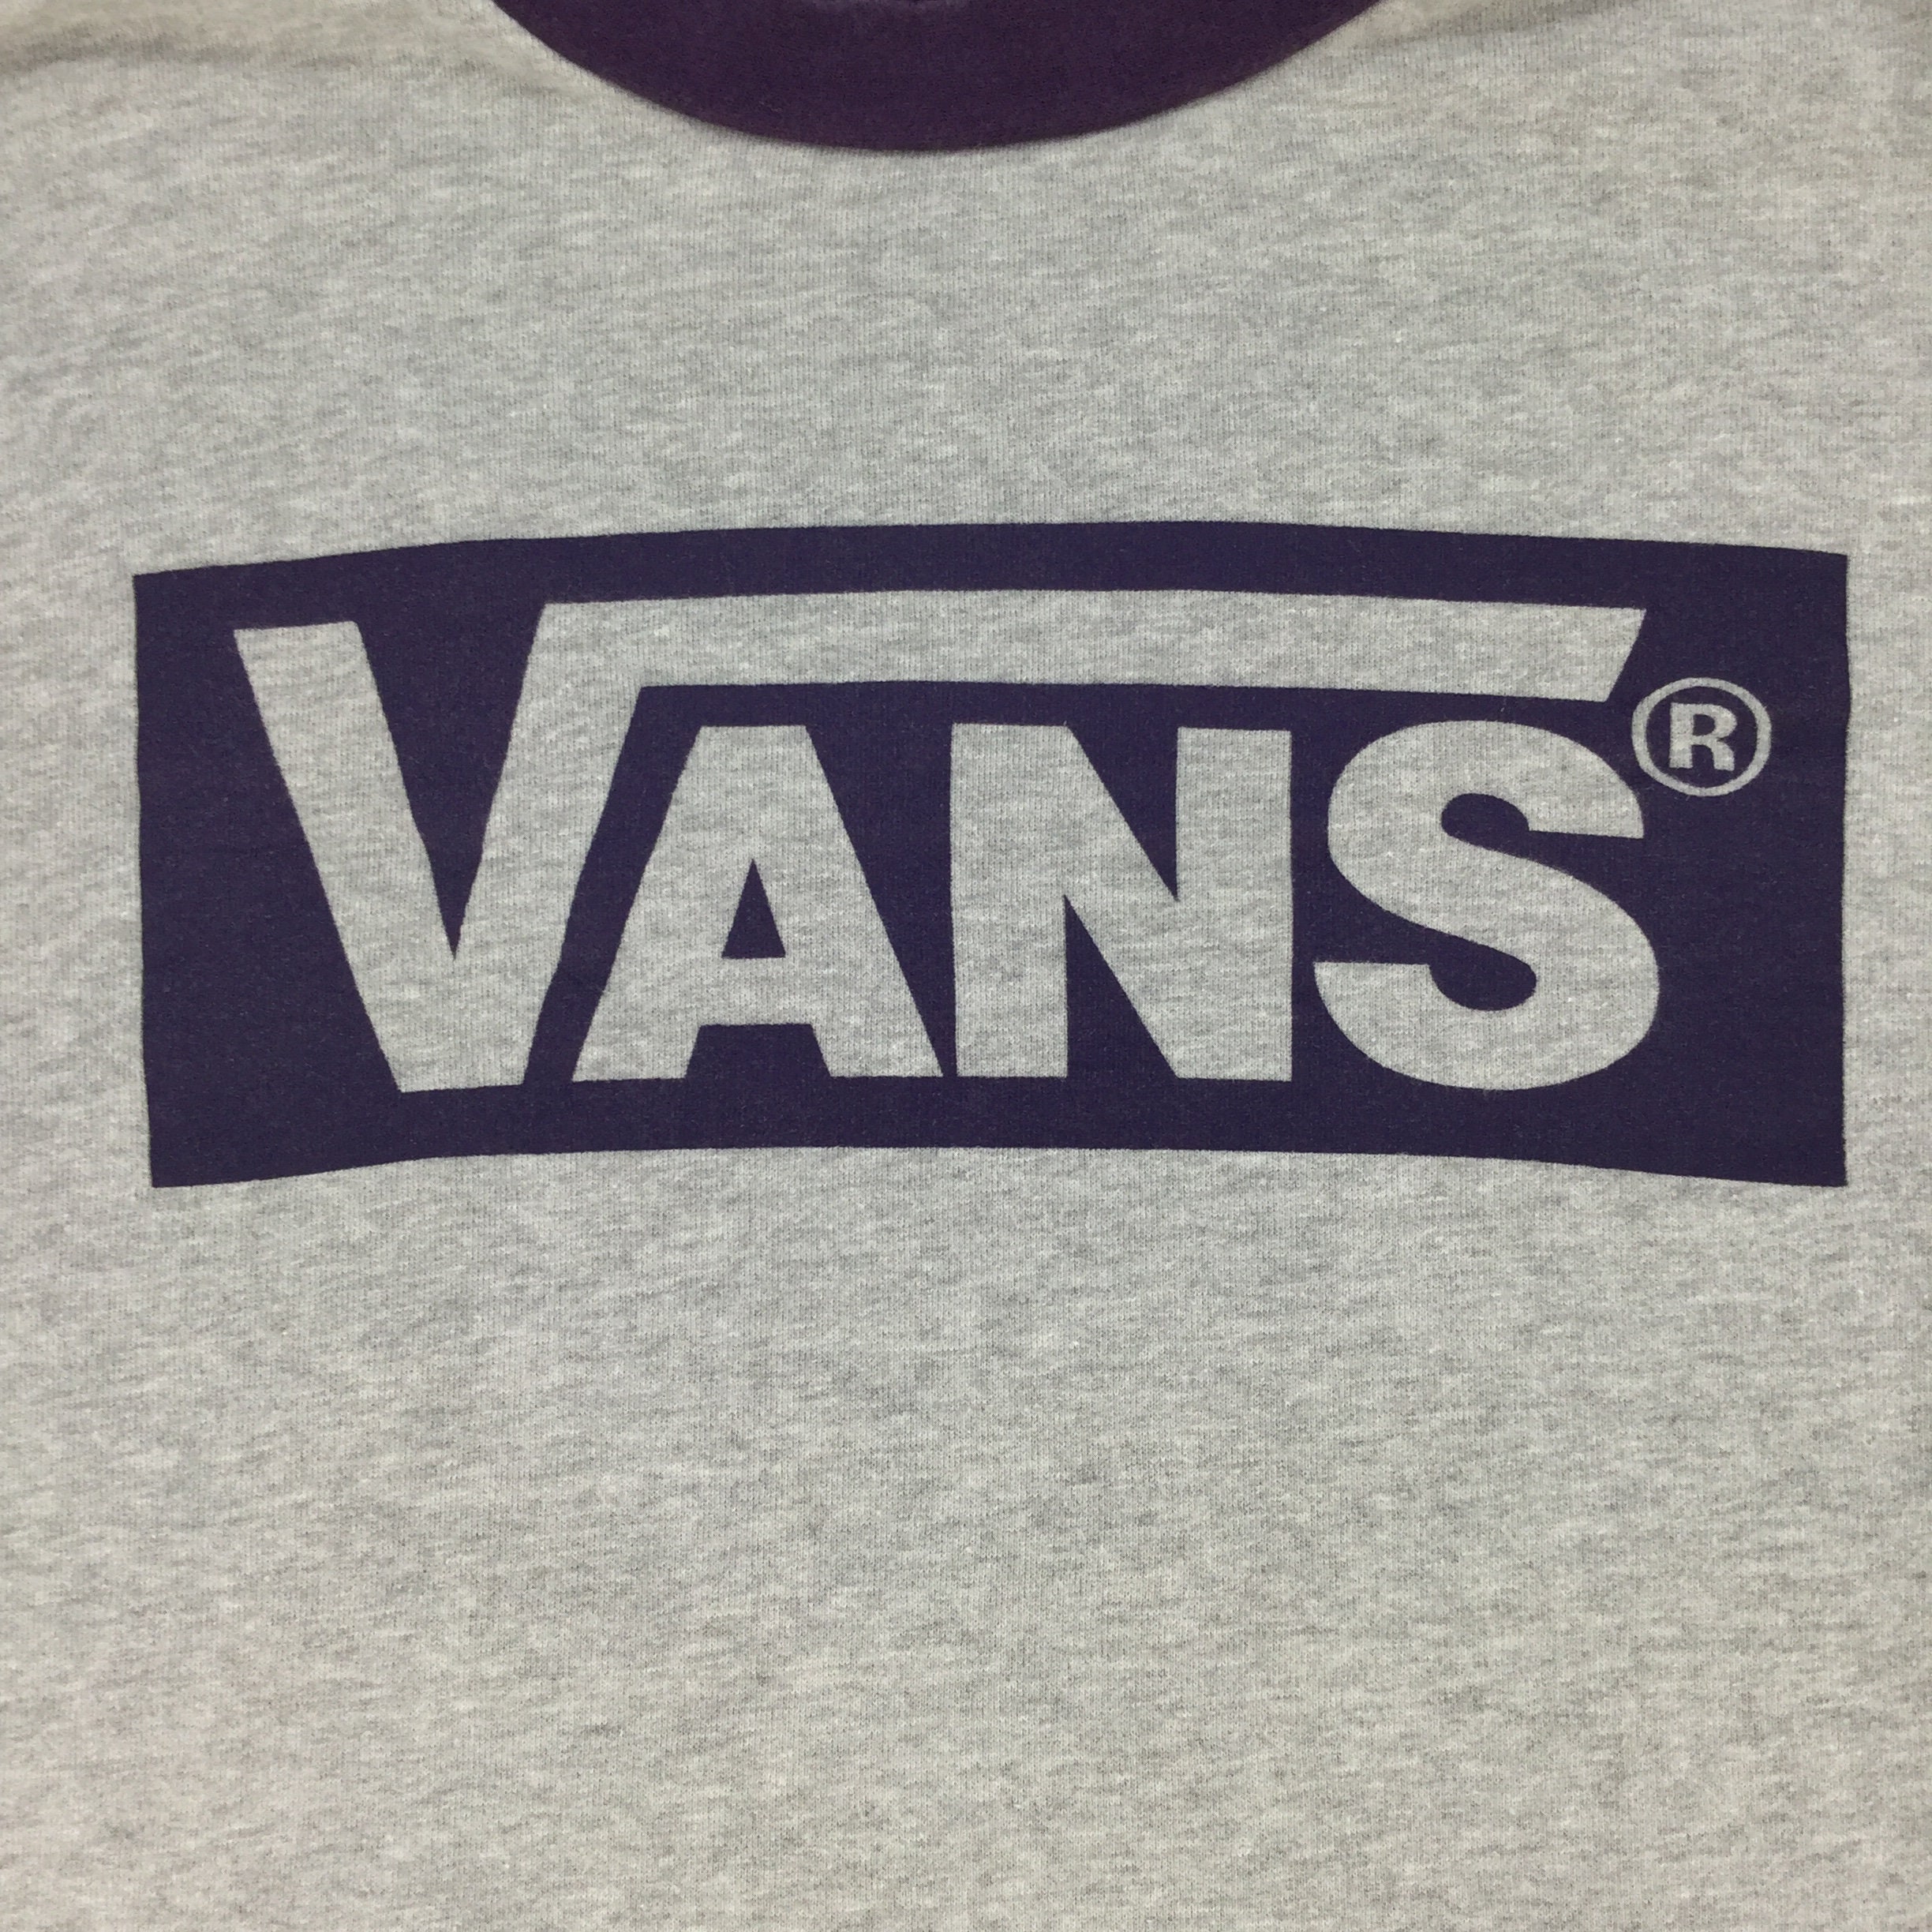 Vans Logo Sweatshirt, Vans Crewneck, Vans Hoodie,vans Shirt,vans  Skateboard, Vans Pullover Sweater, Unisex, Small Size - Etsy